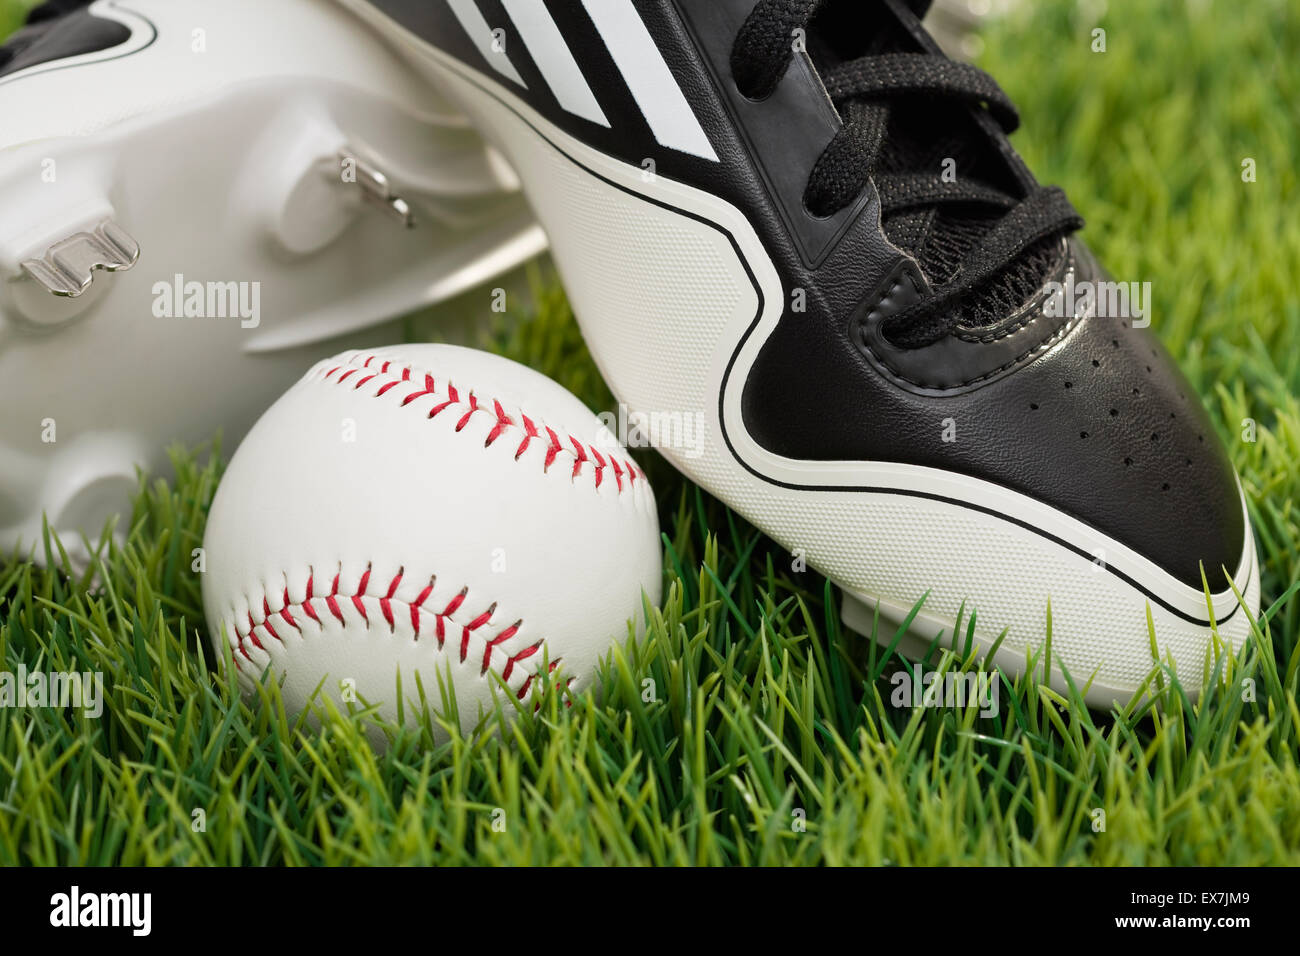 Baseball shoes and ball on grass Stock Photo - Alamy